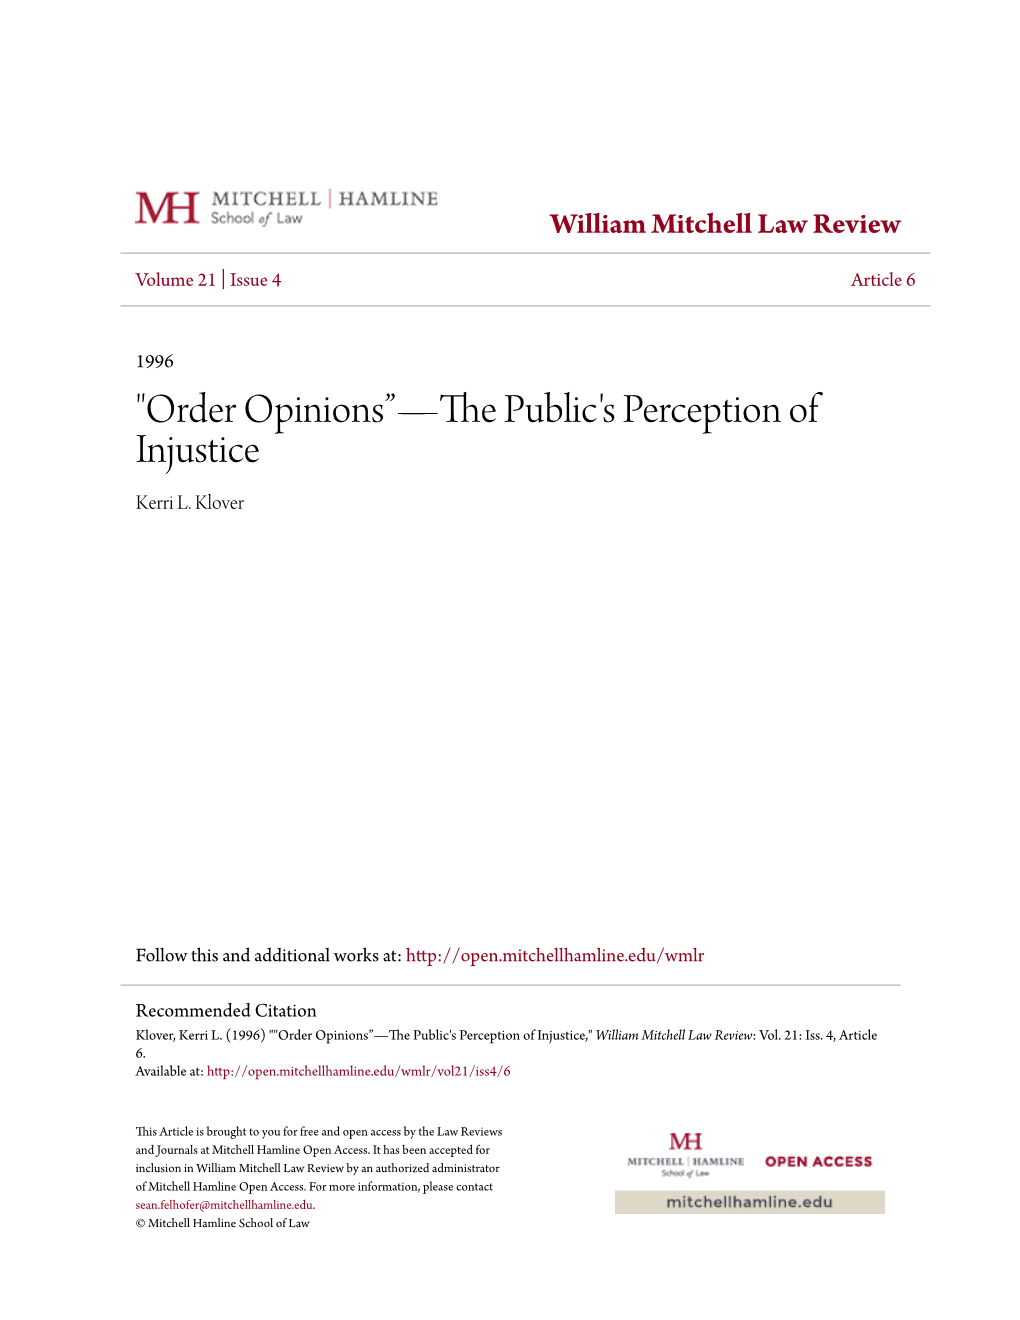 Order Opinions”—The Public's Perception of Injustice Kerri L